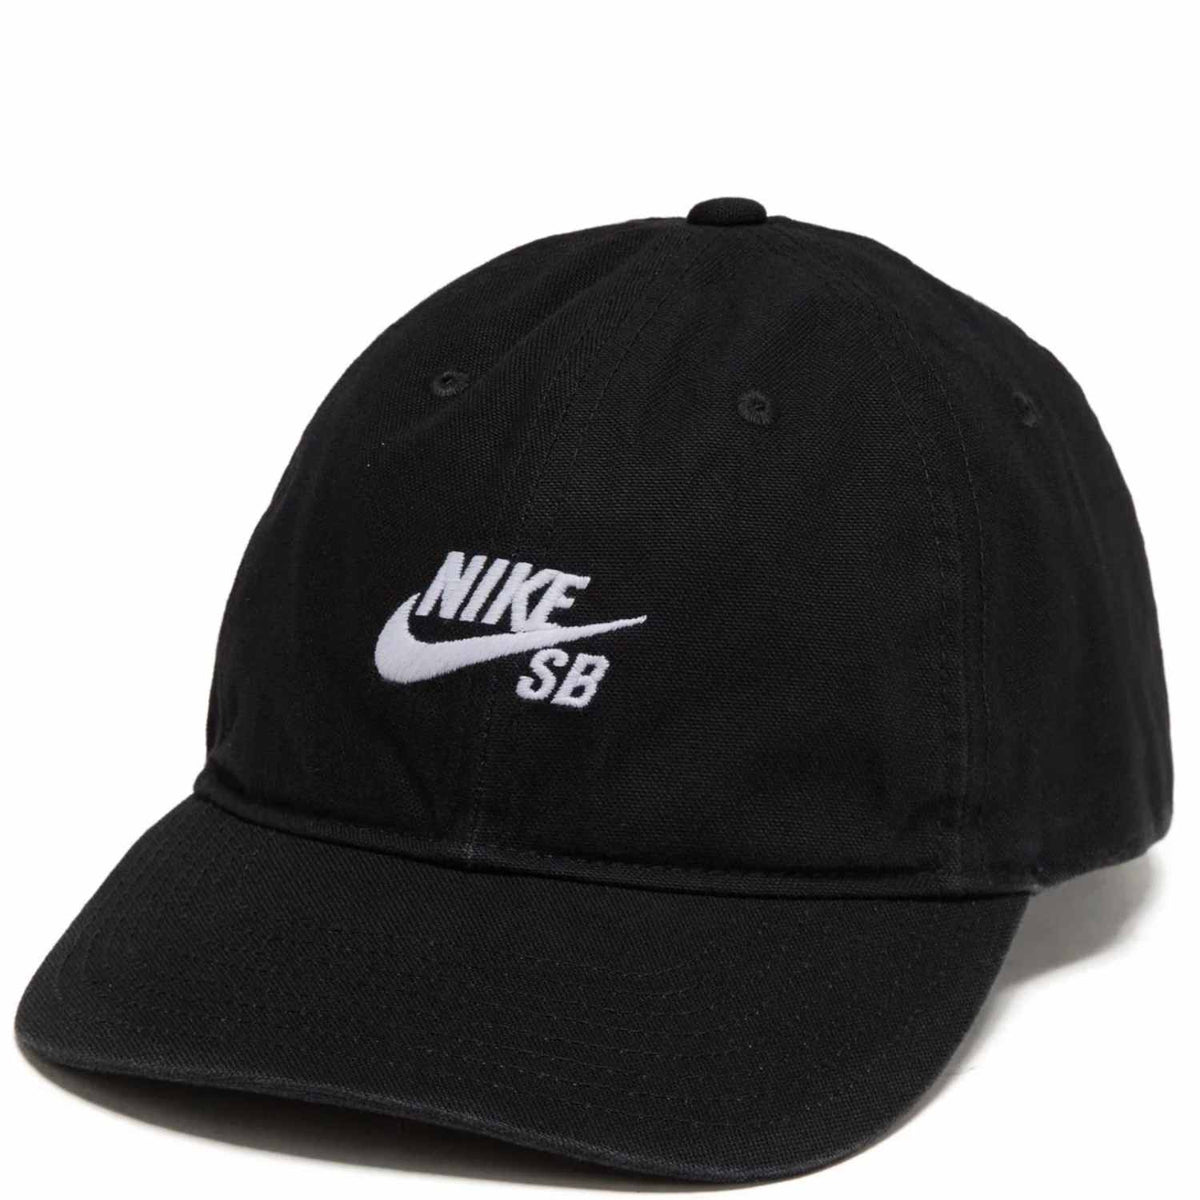 Nike SB - Club Cap S24 - HF7278-010